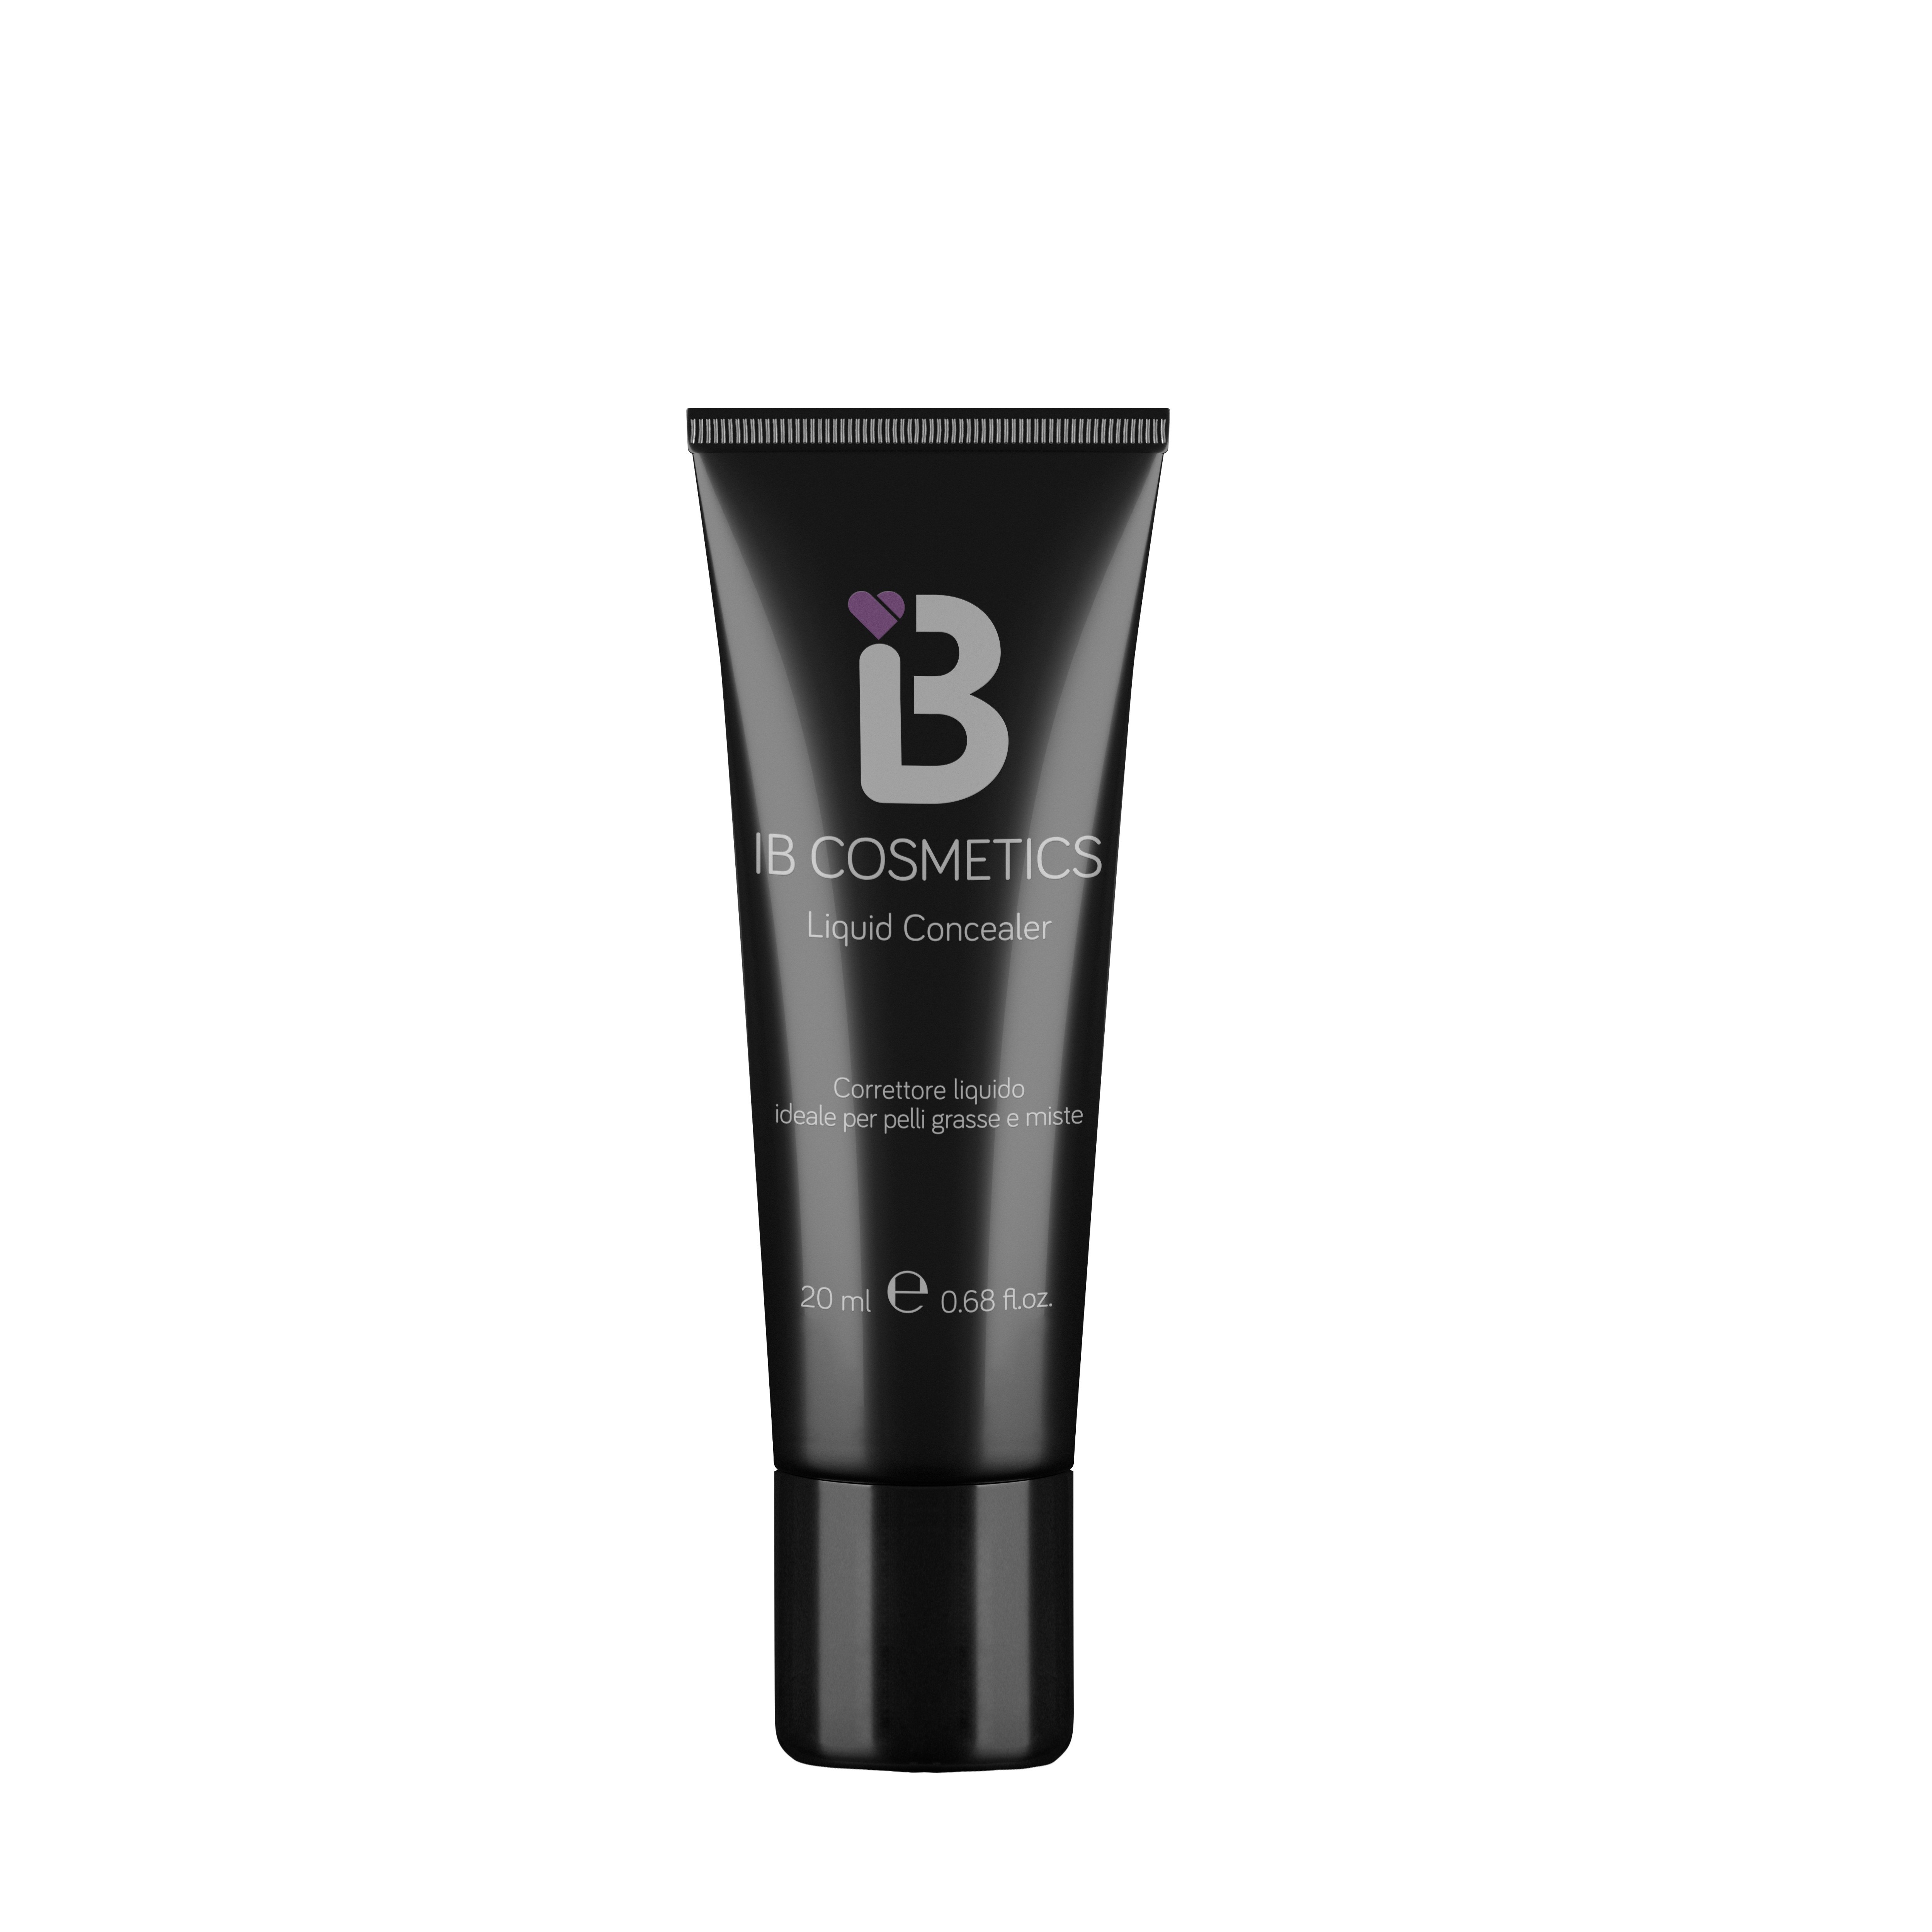 IB cosmetics Liquid Concealer – correttore liquido - Idea Bellezza